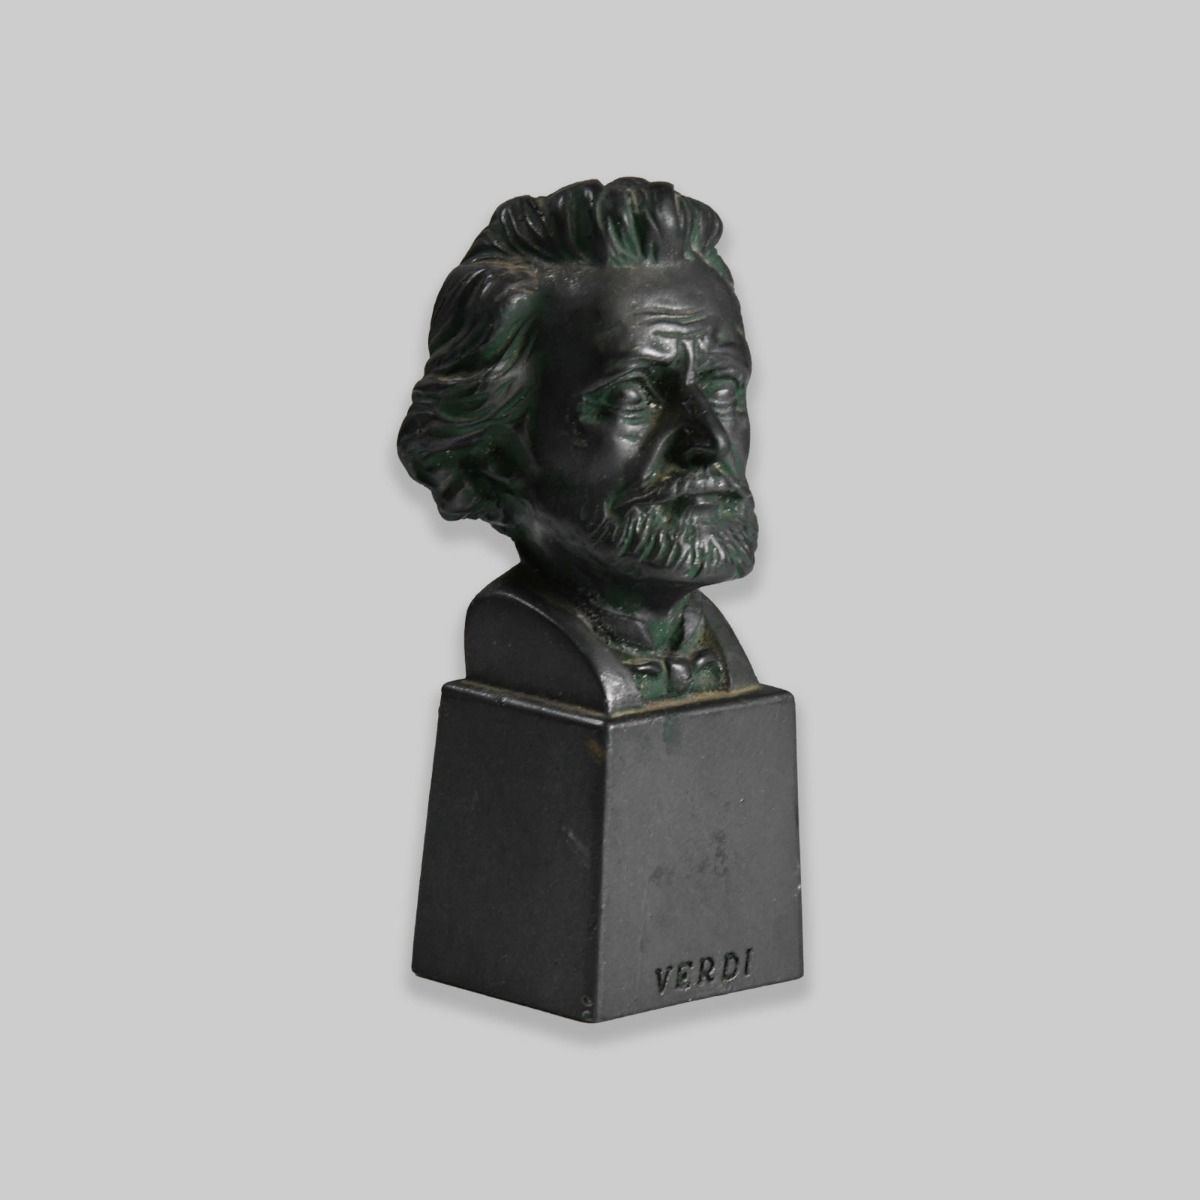 Vintage Giuseppe Verdi Bust Paperweight